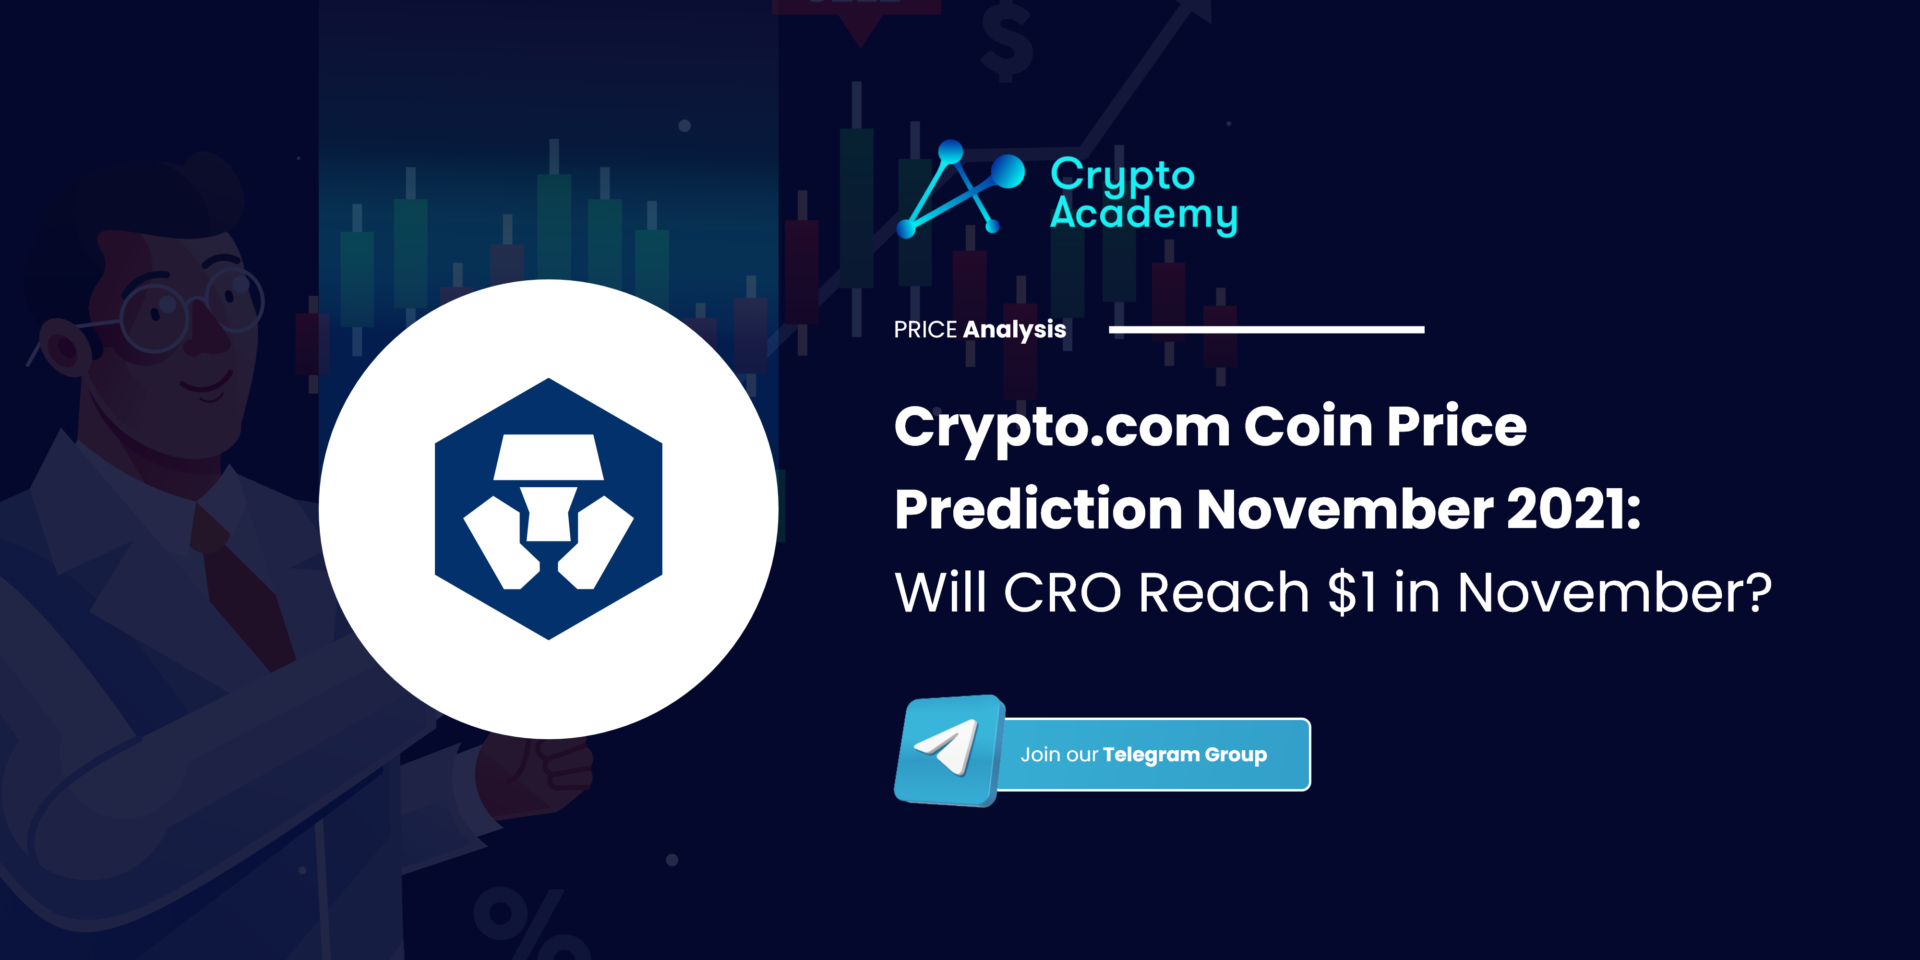 Crypto.com Coin Price Prediction November 2021: Will CRO Reach $1 in November?